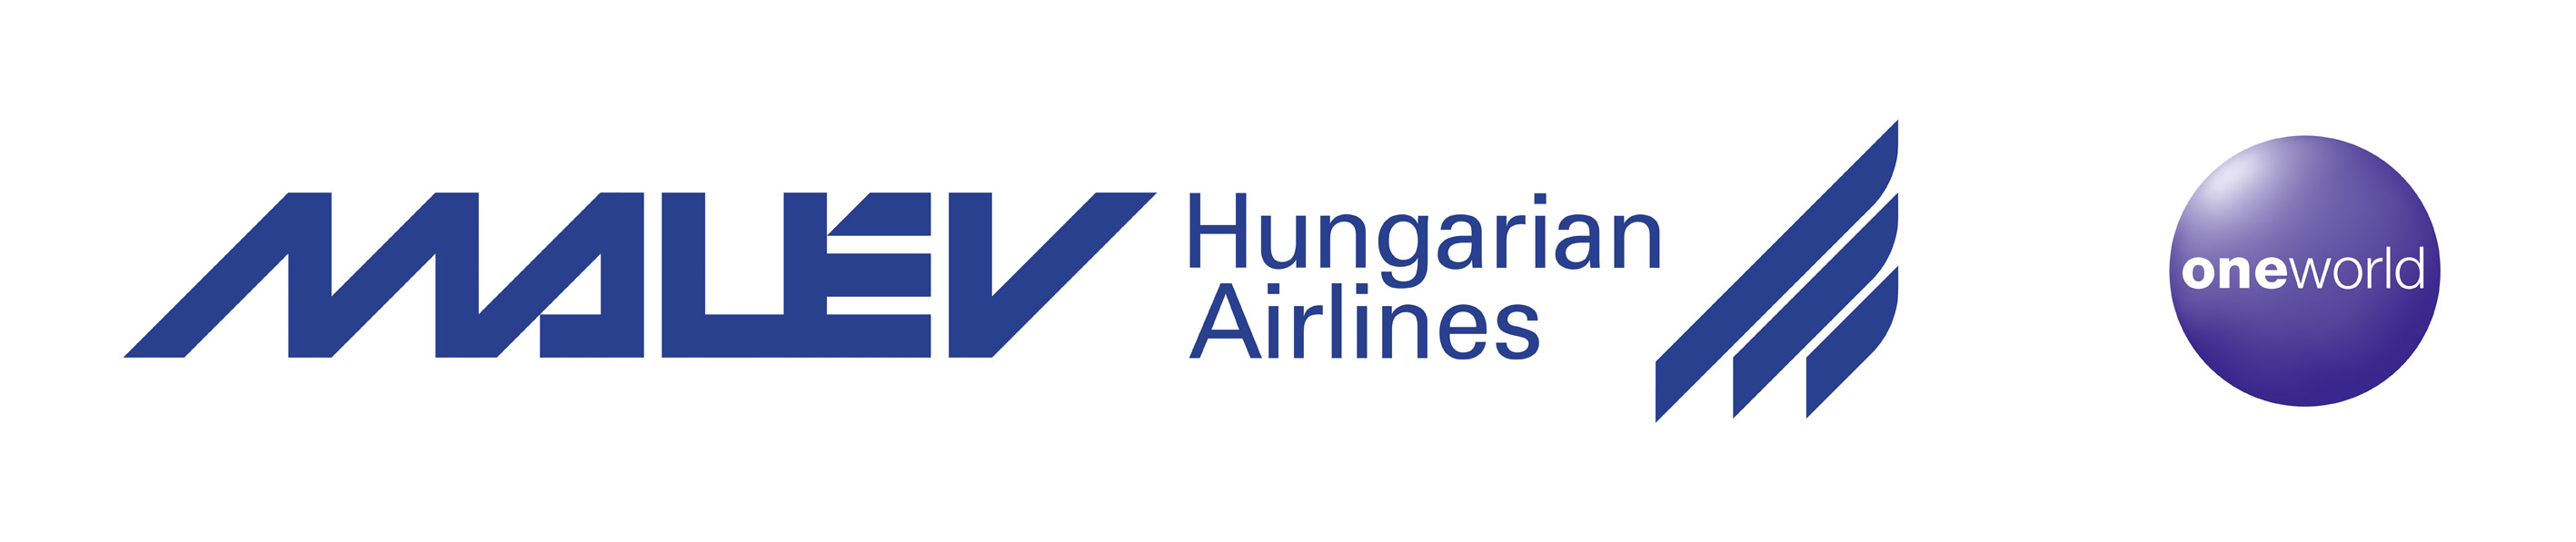 Malev - Hungarian Airlines (Малев - Венгерские авиалинии)